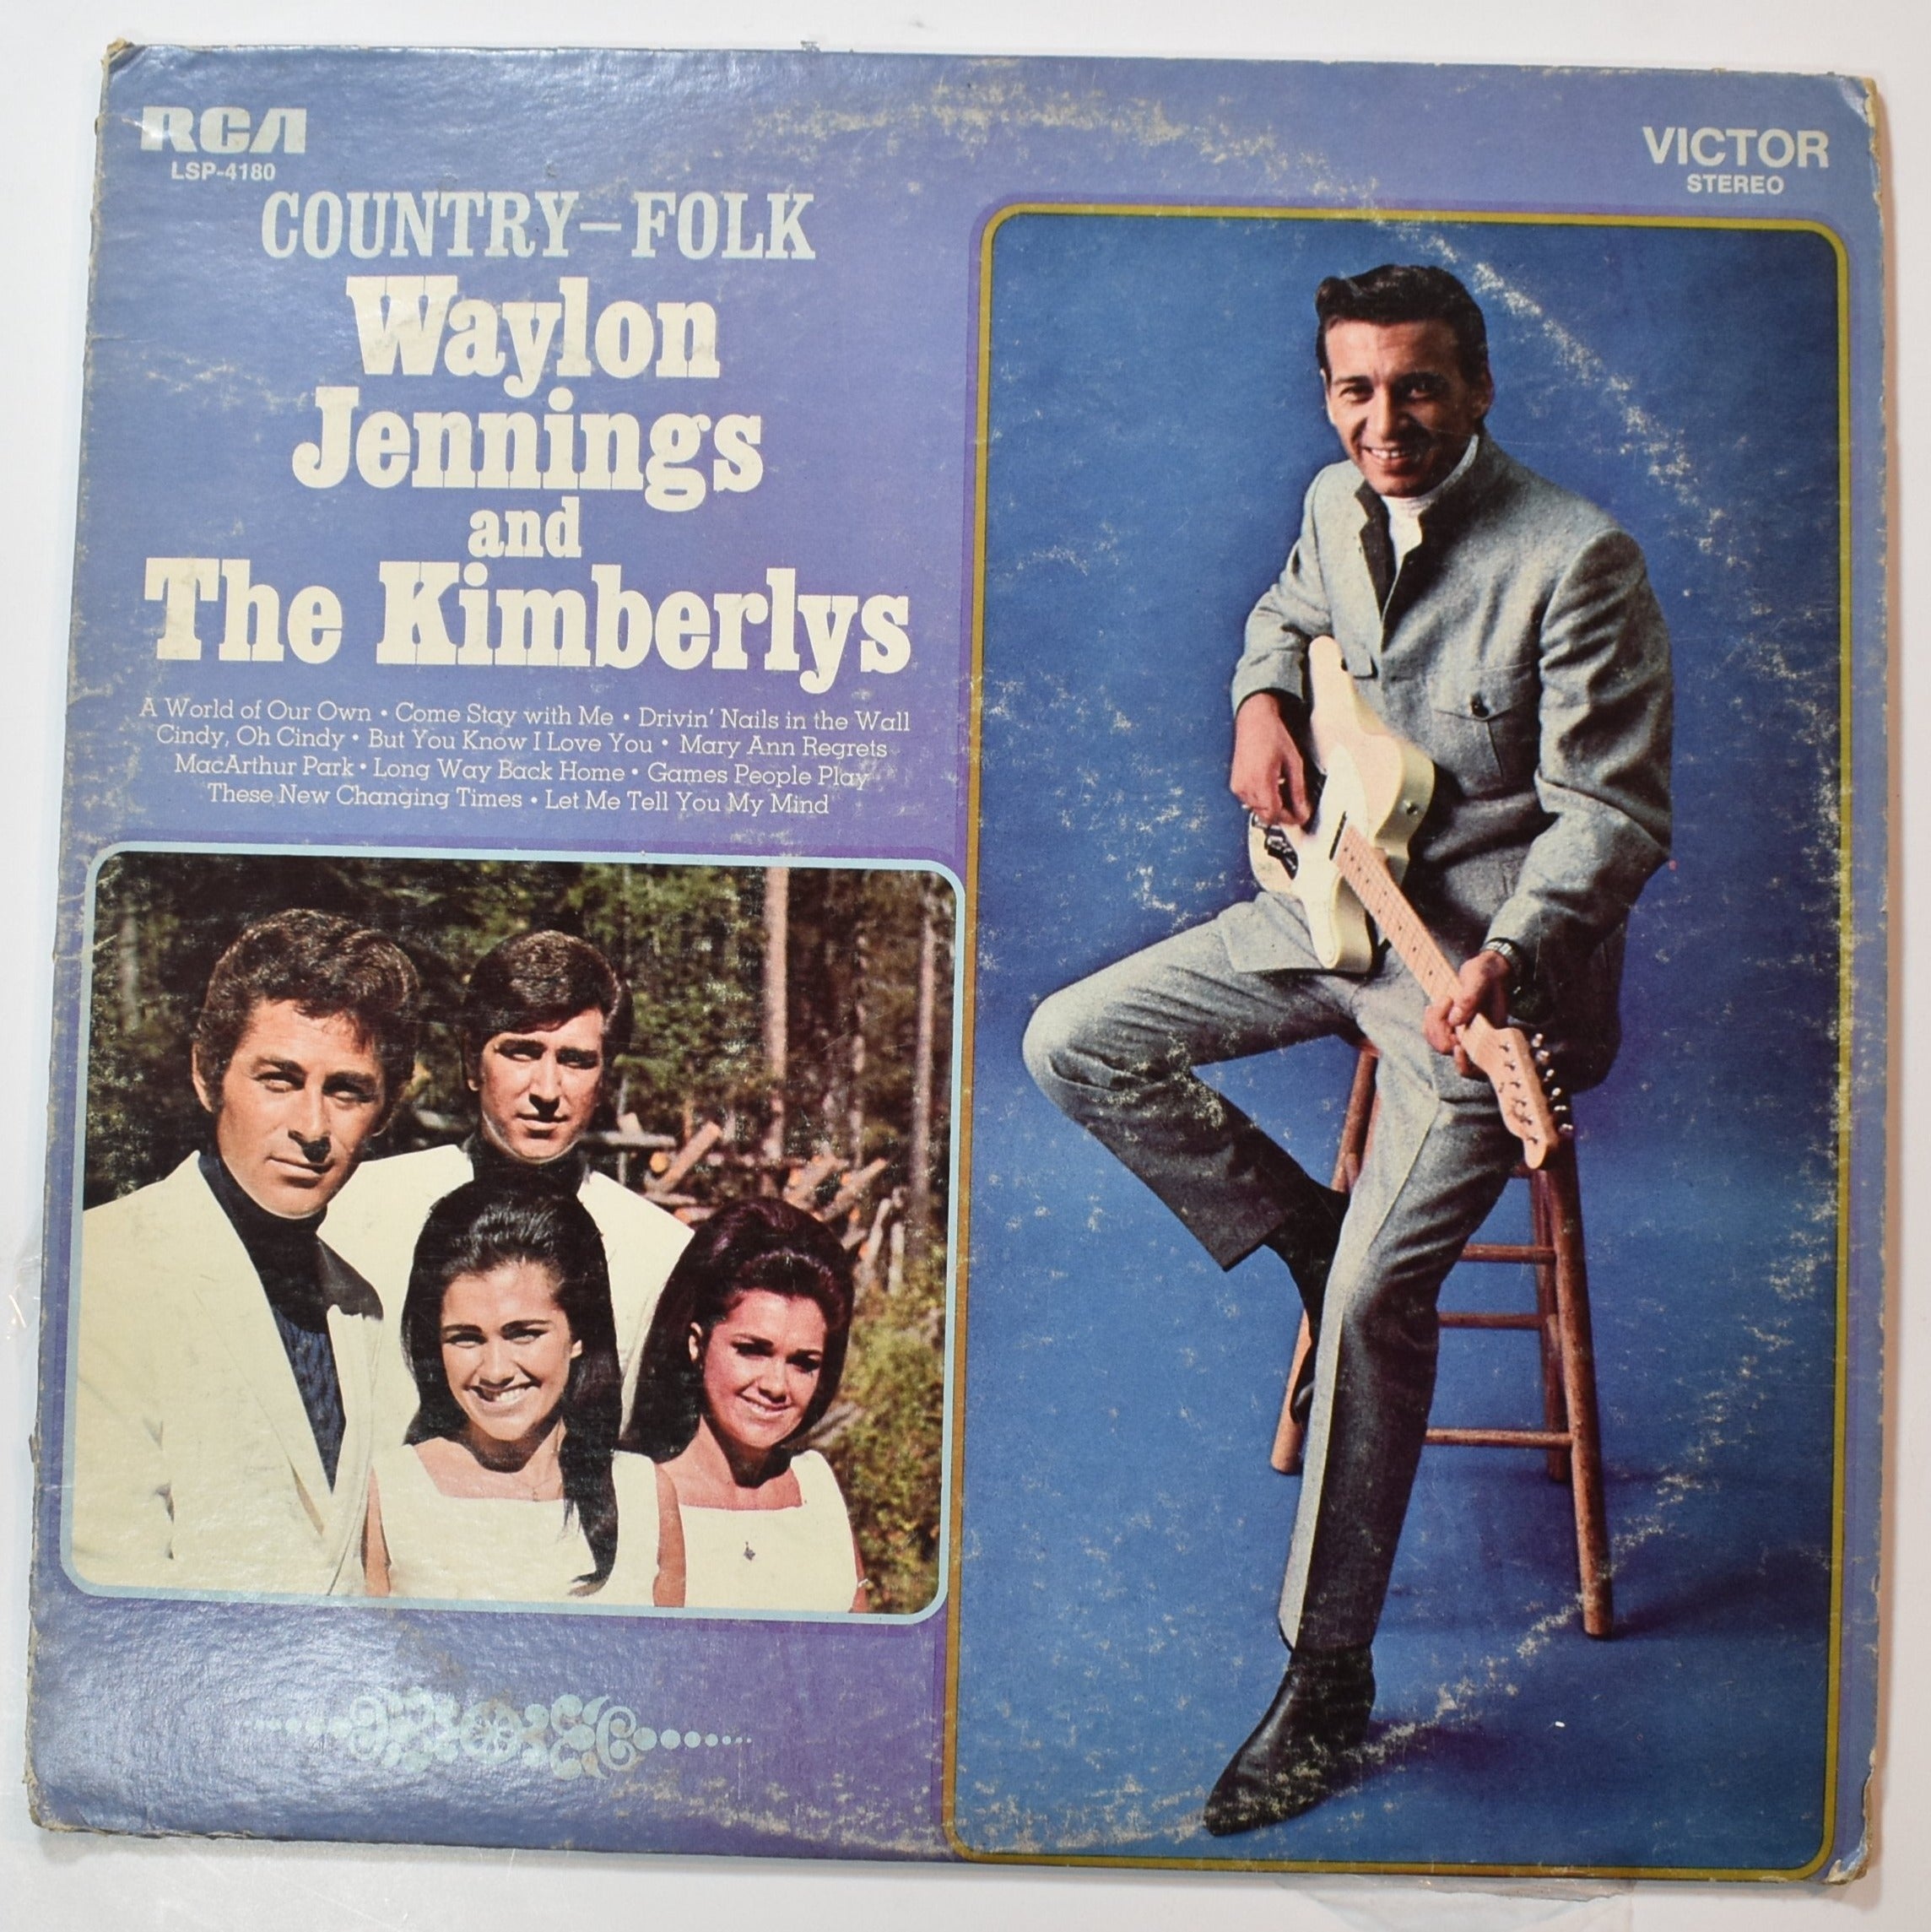 Vinyl Music Record Waylon Jennings and the Kimberlys record Country folk